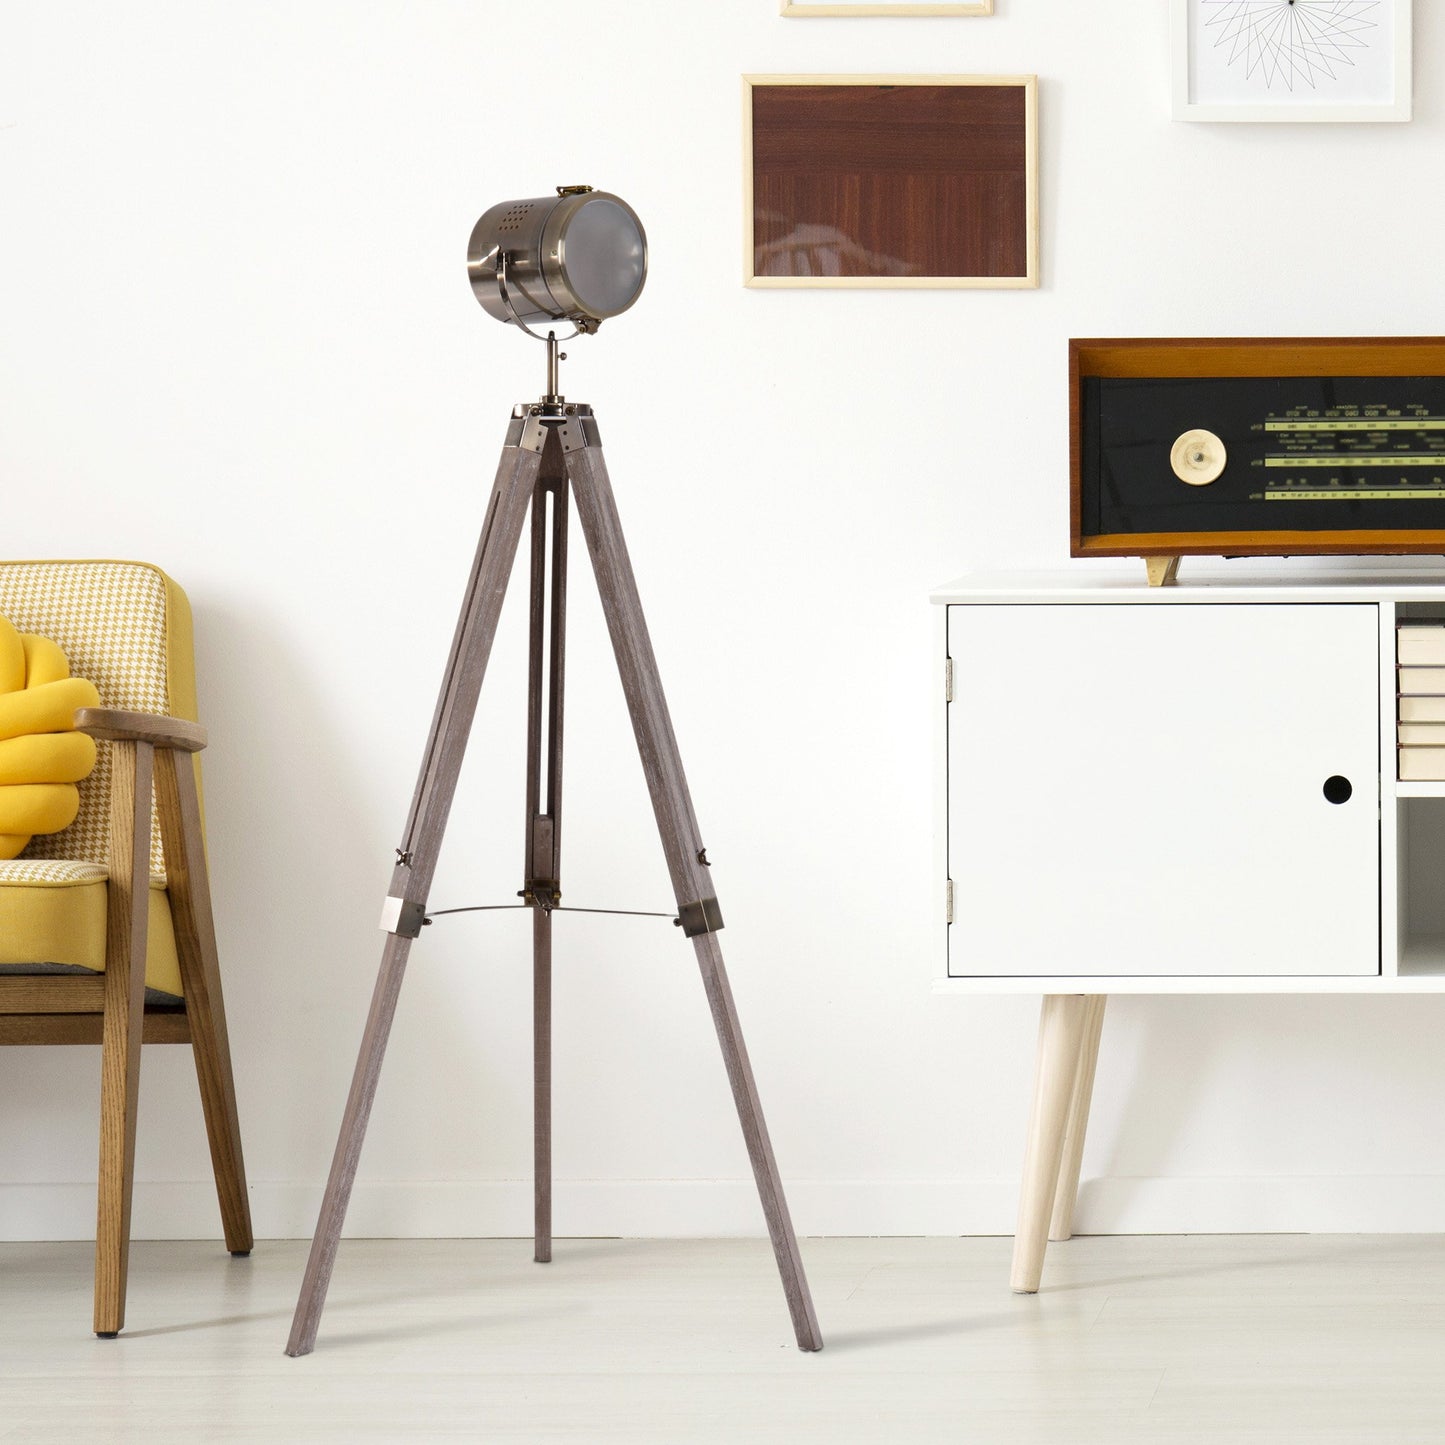 HOMCOM Vintage Tripod Floor Lamp, 65L, Modern Adjustable Height Tall Table Lamp for Living Room Bedroom-Wood/Bronze Colour